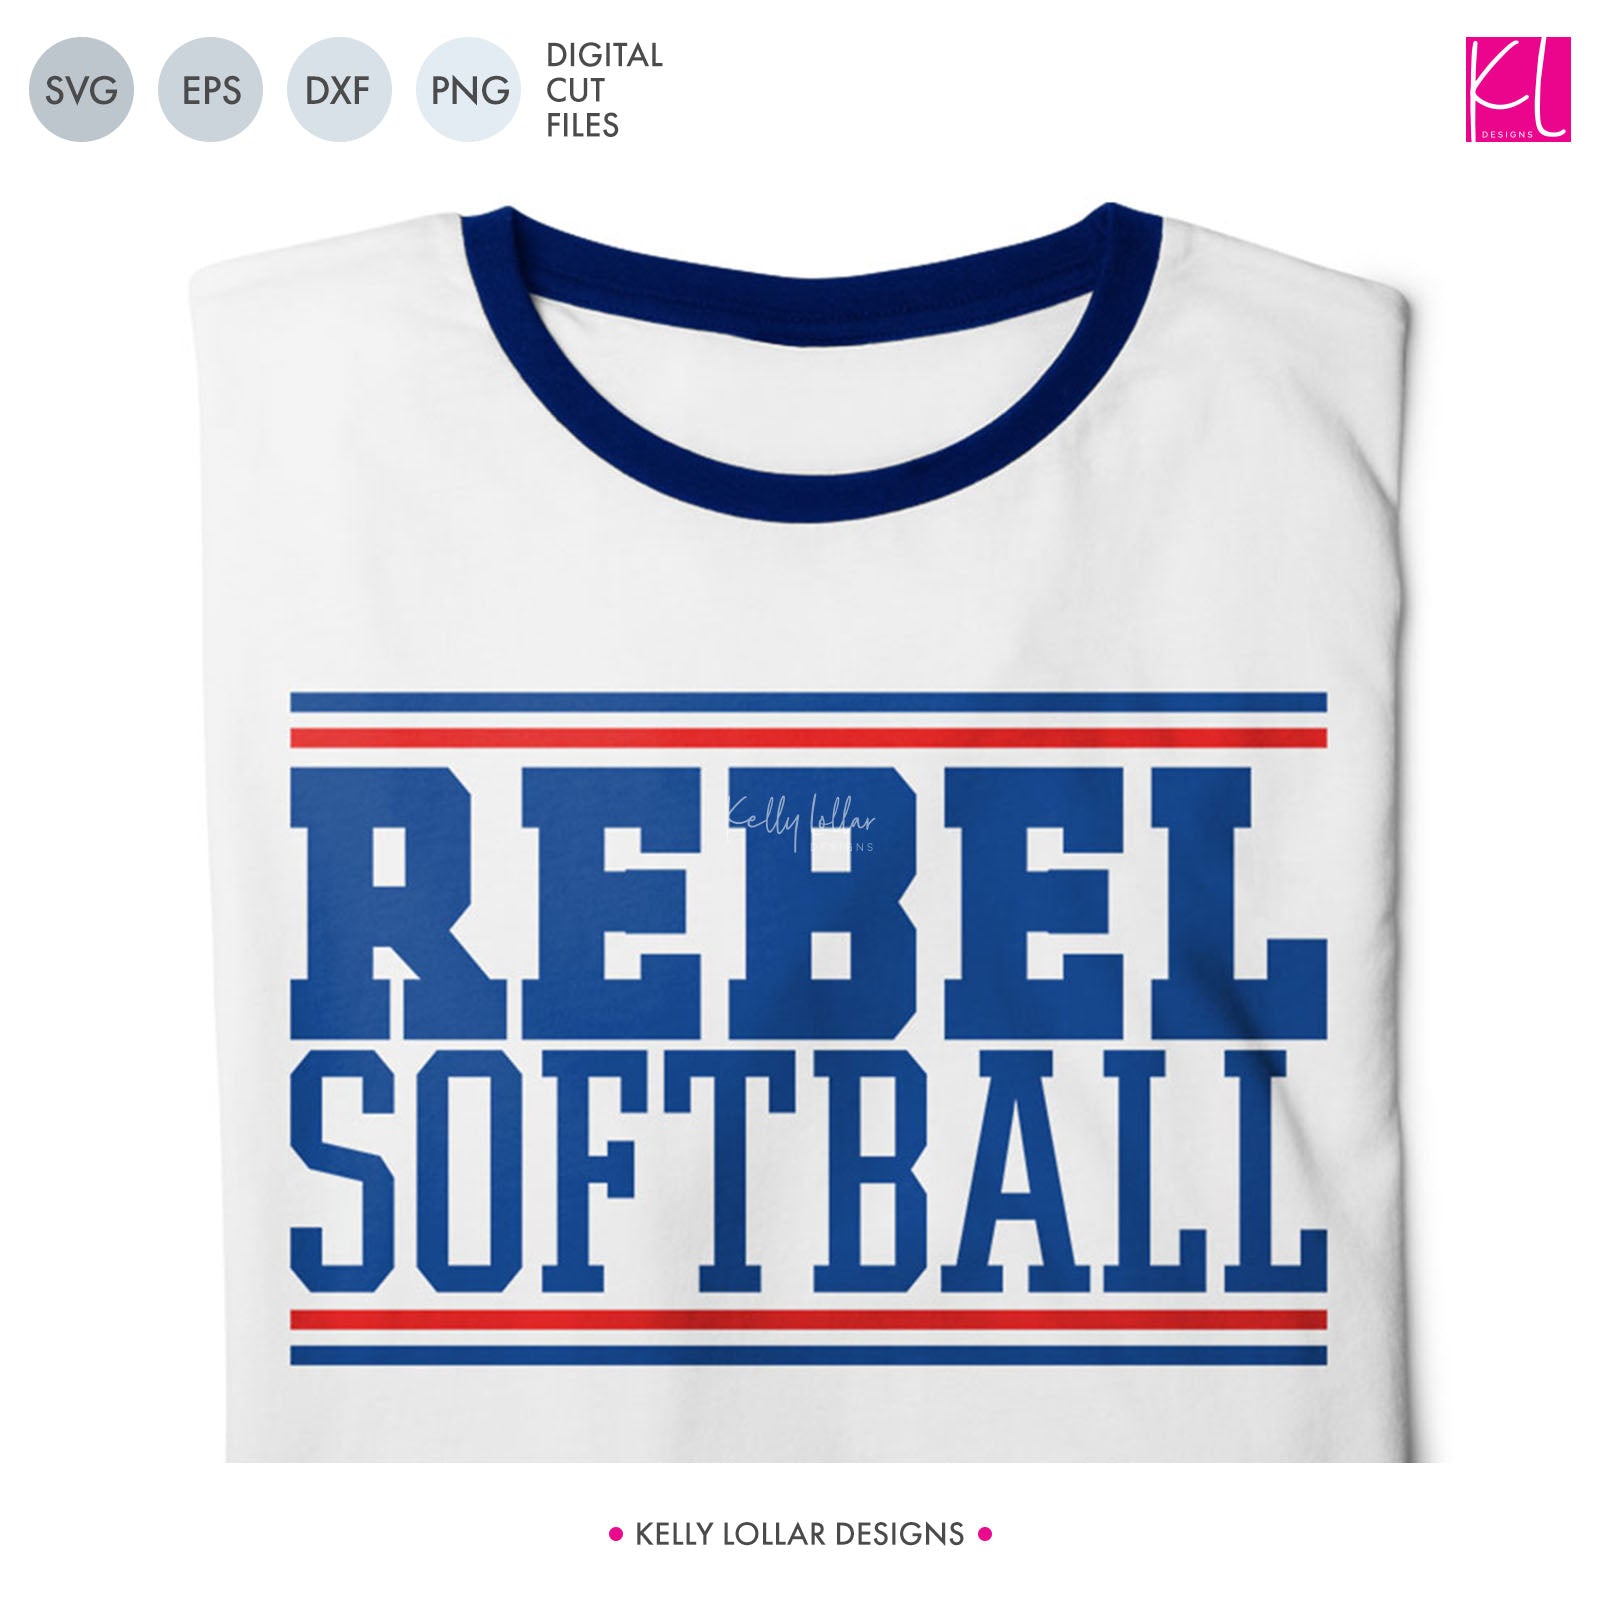 Rebels Baseball & Softball Bundle